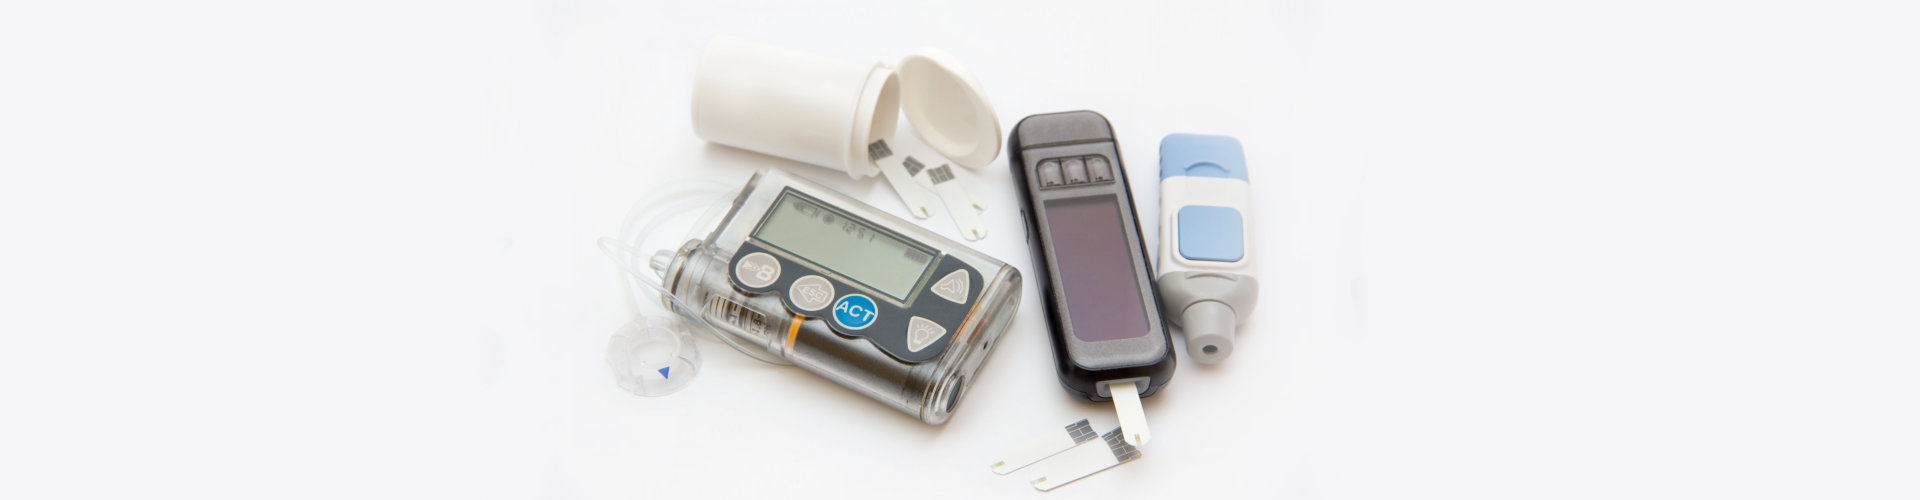 insulin pump and blood sugar meter